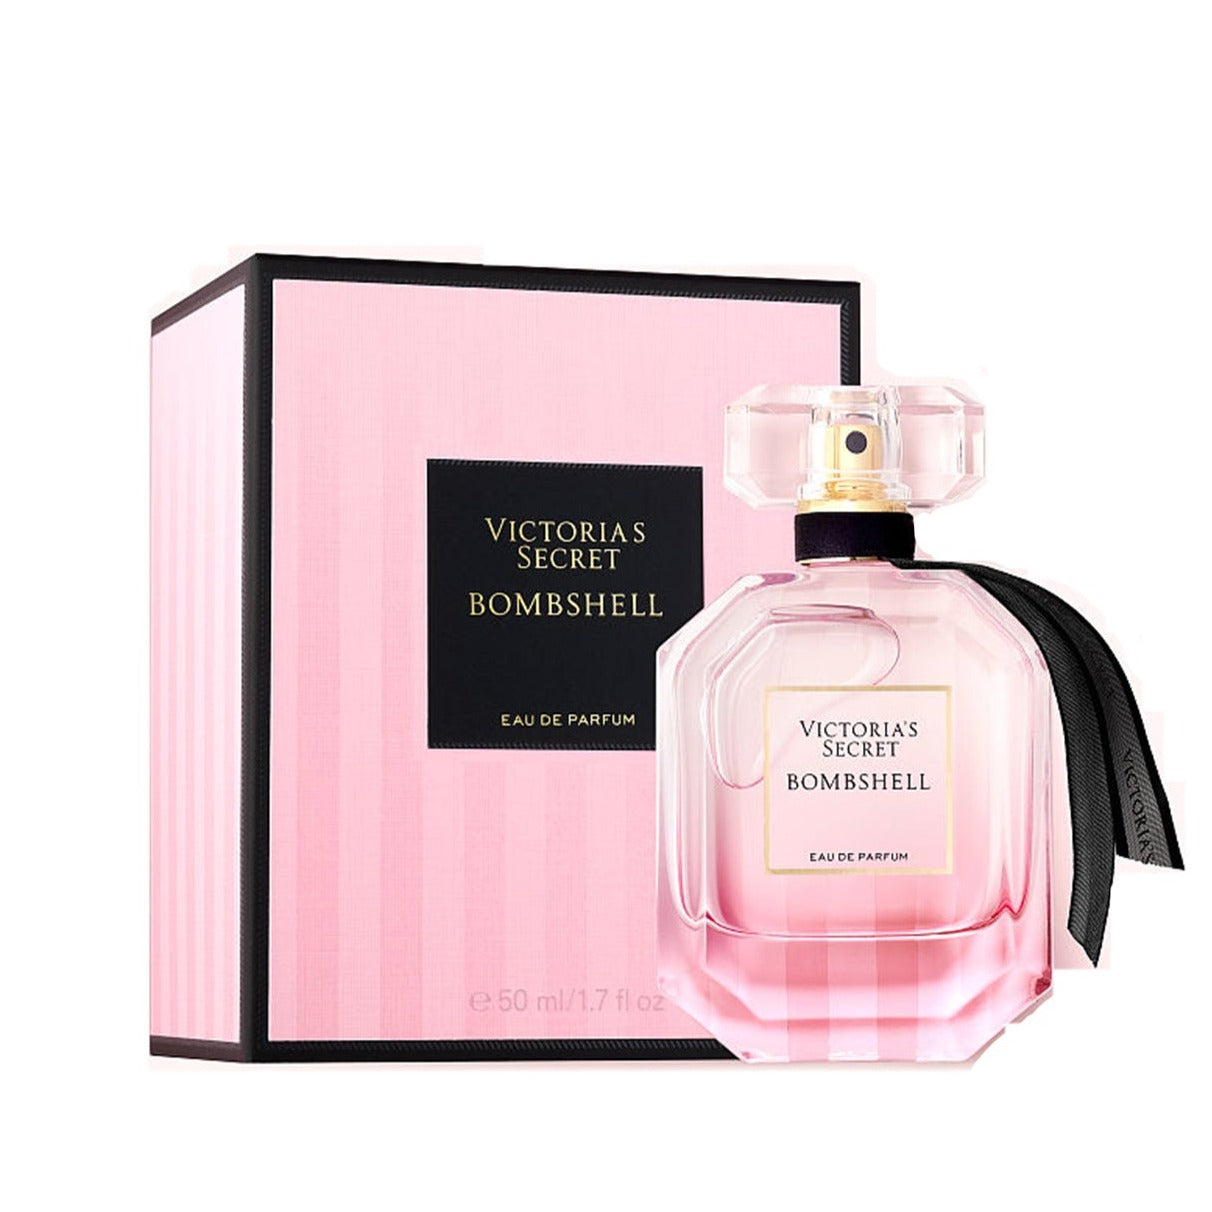 Shop Victoria secret Bombshell Eau De Parfum available at Heygirl.pk for delivery in Pakistan